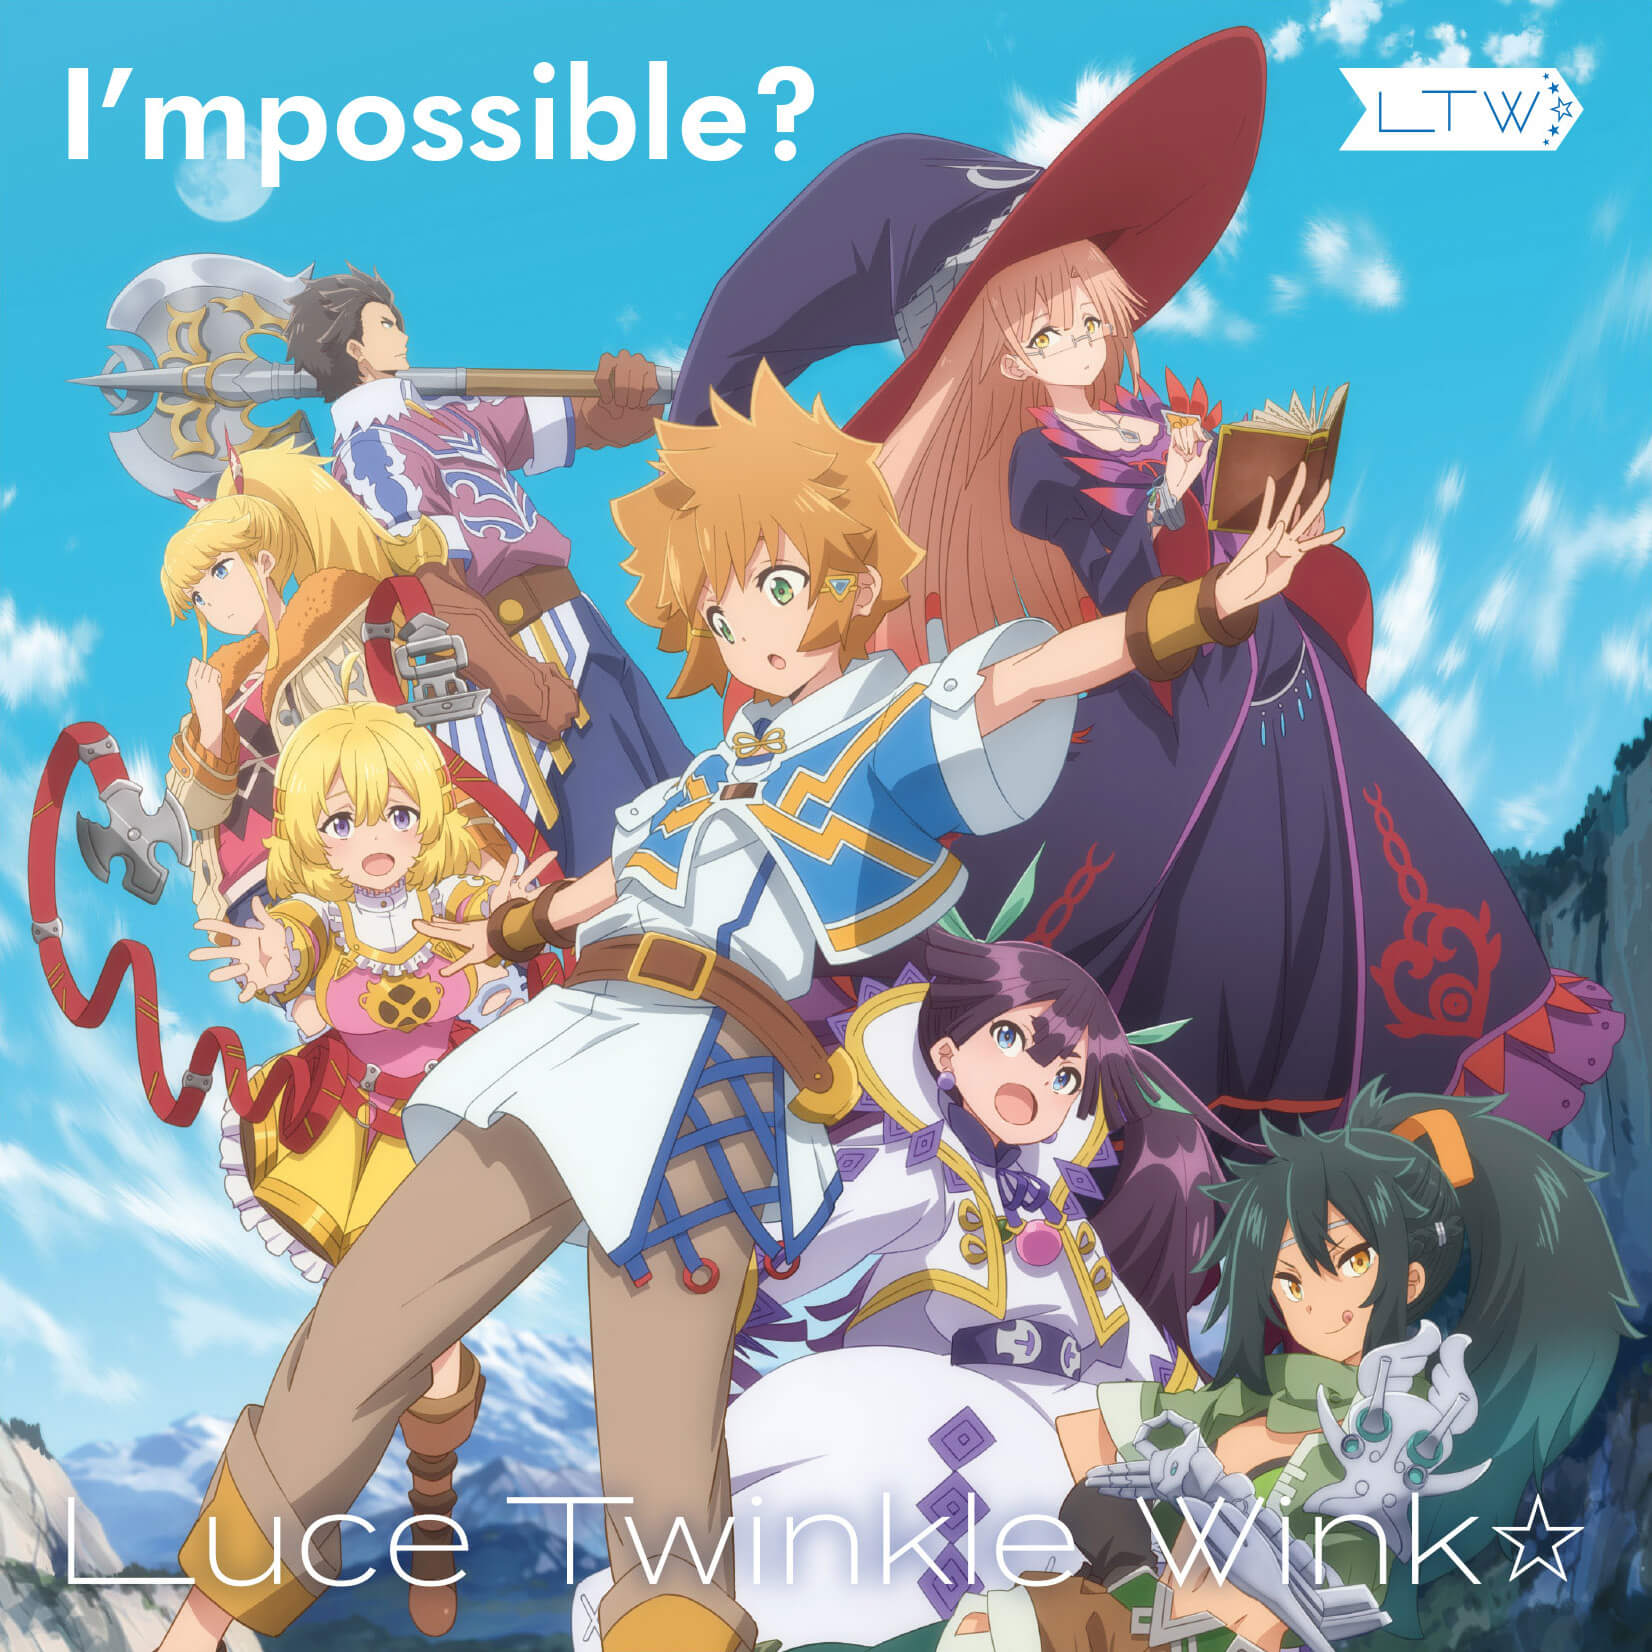 Luce Twinkle Wink☆ - I'mpossible?